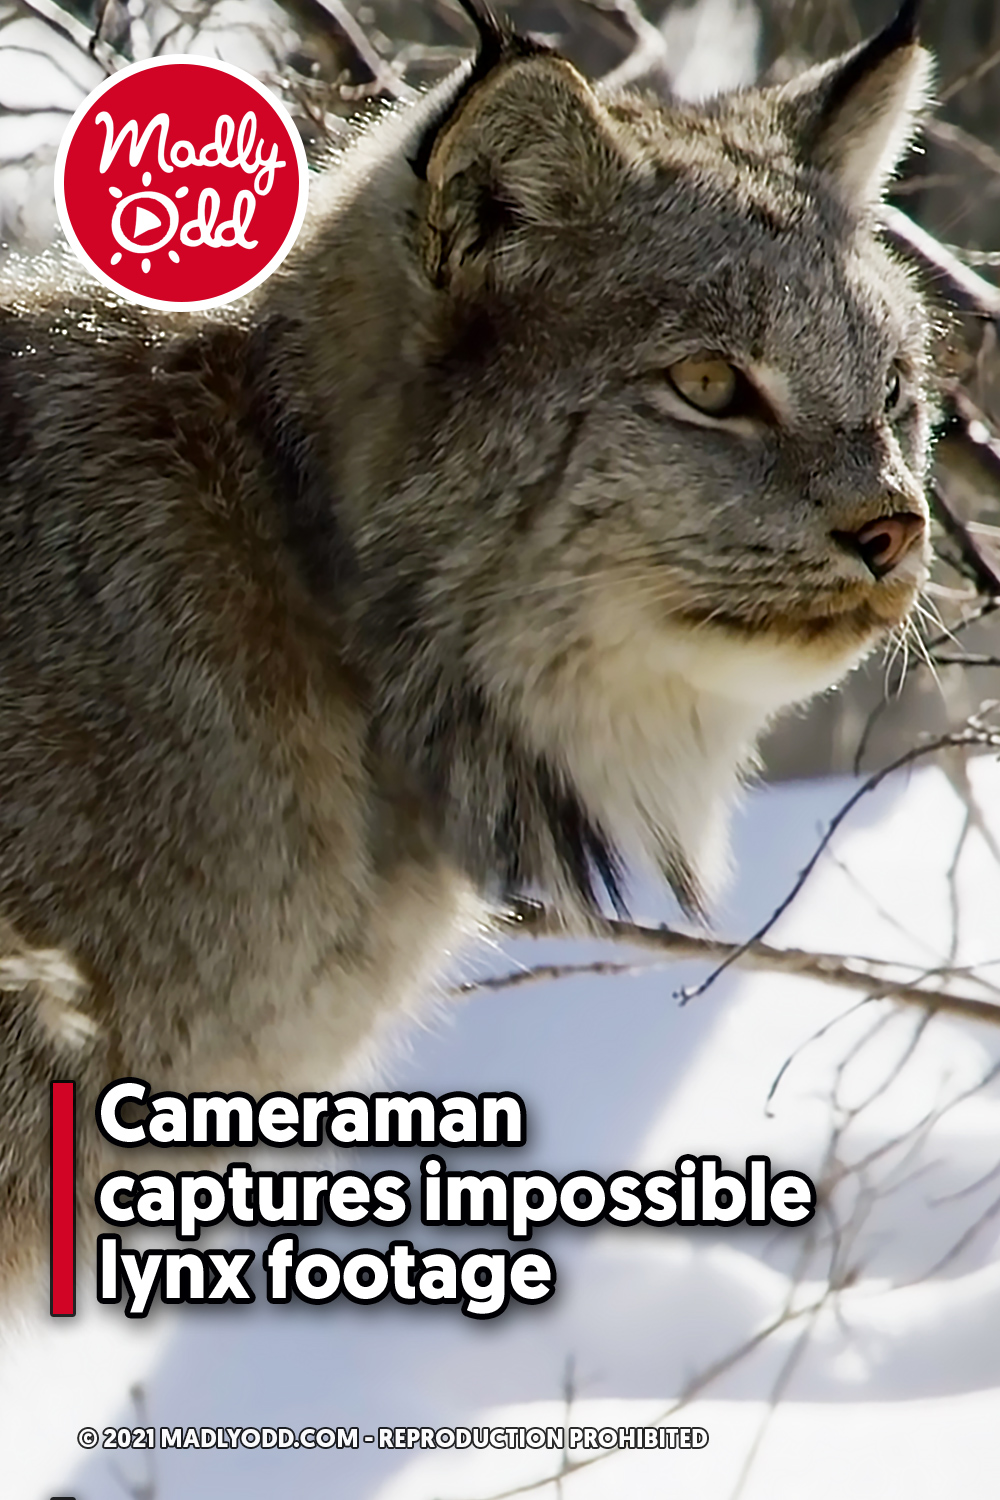 Cameraman captures impossible lynx footage